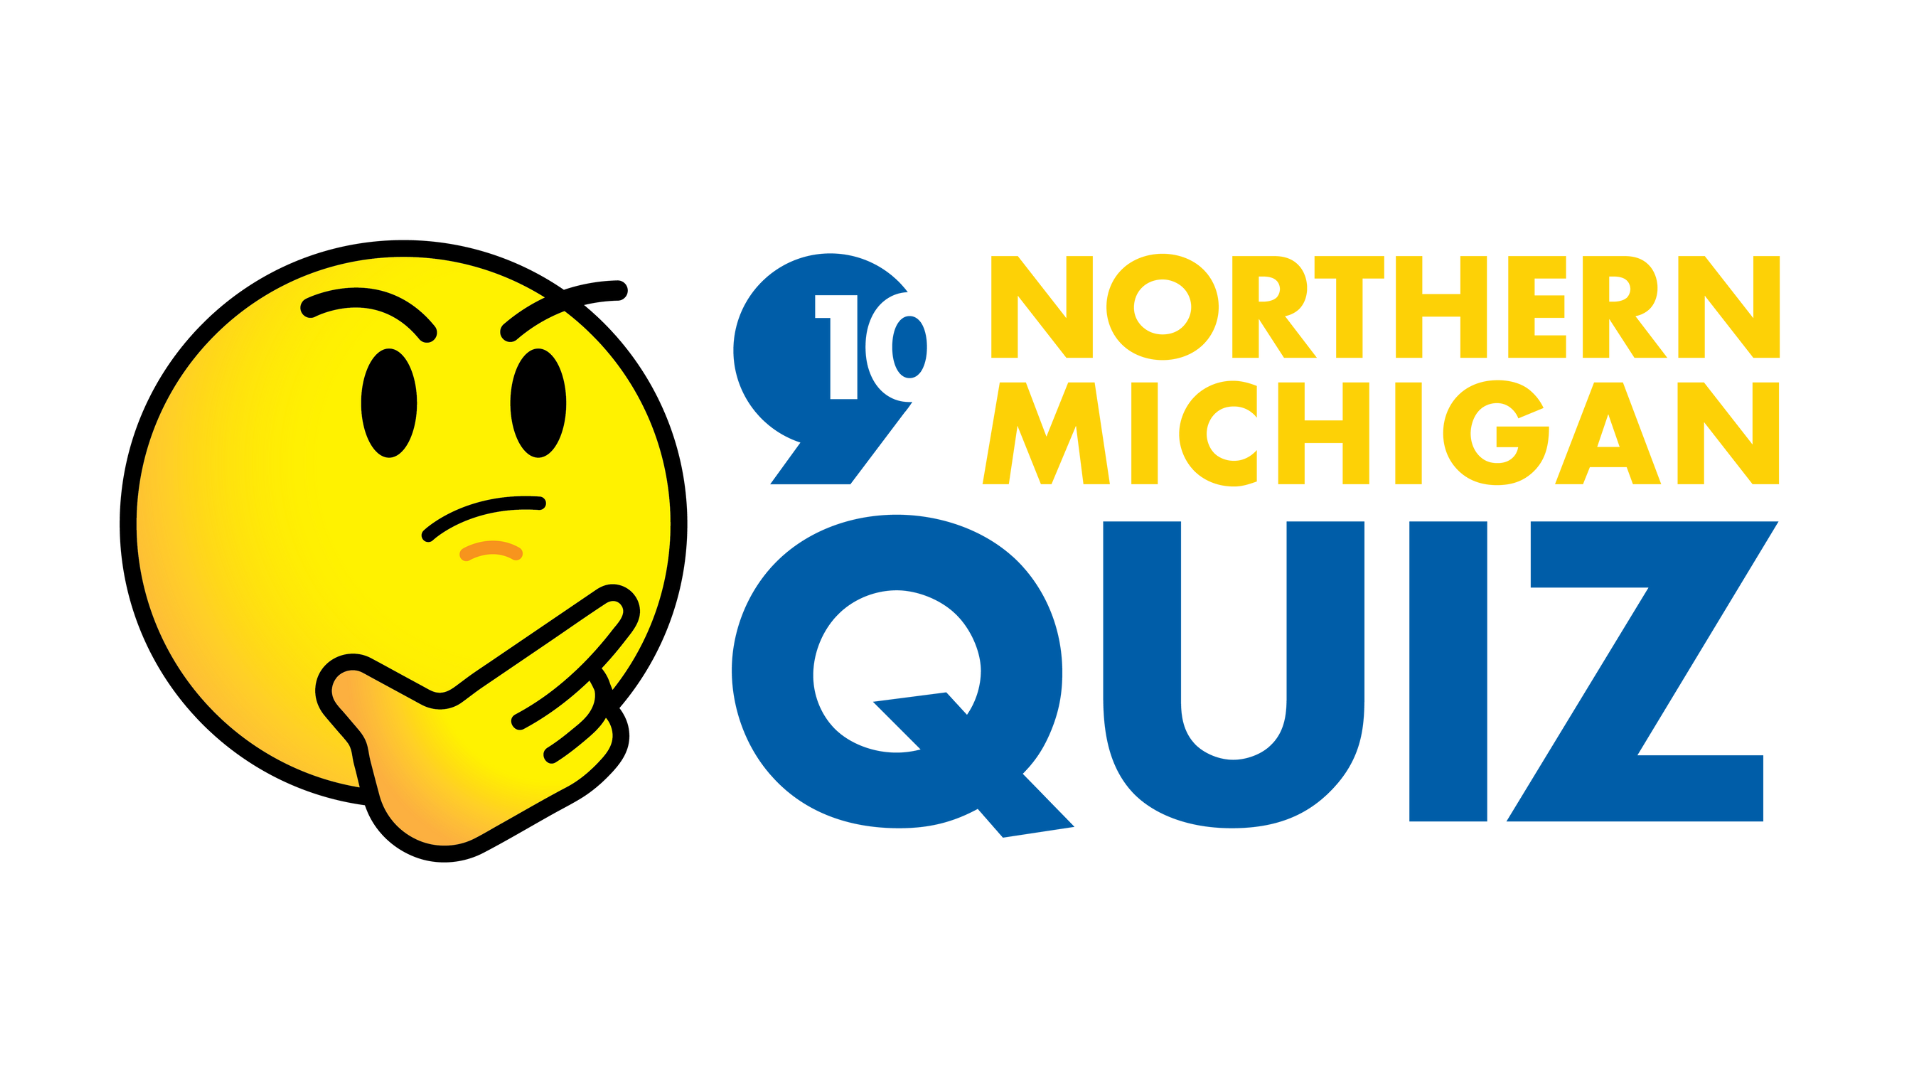 Take the 9&10 Northern Michigan quiz, May 16 edition